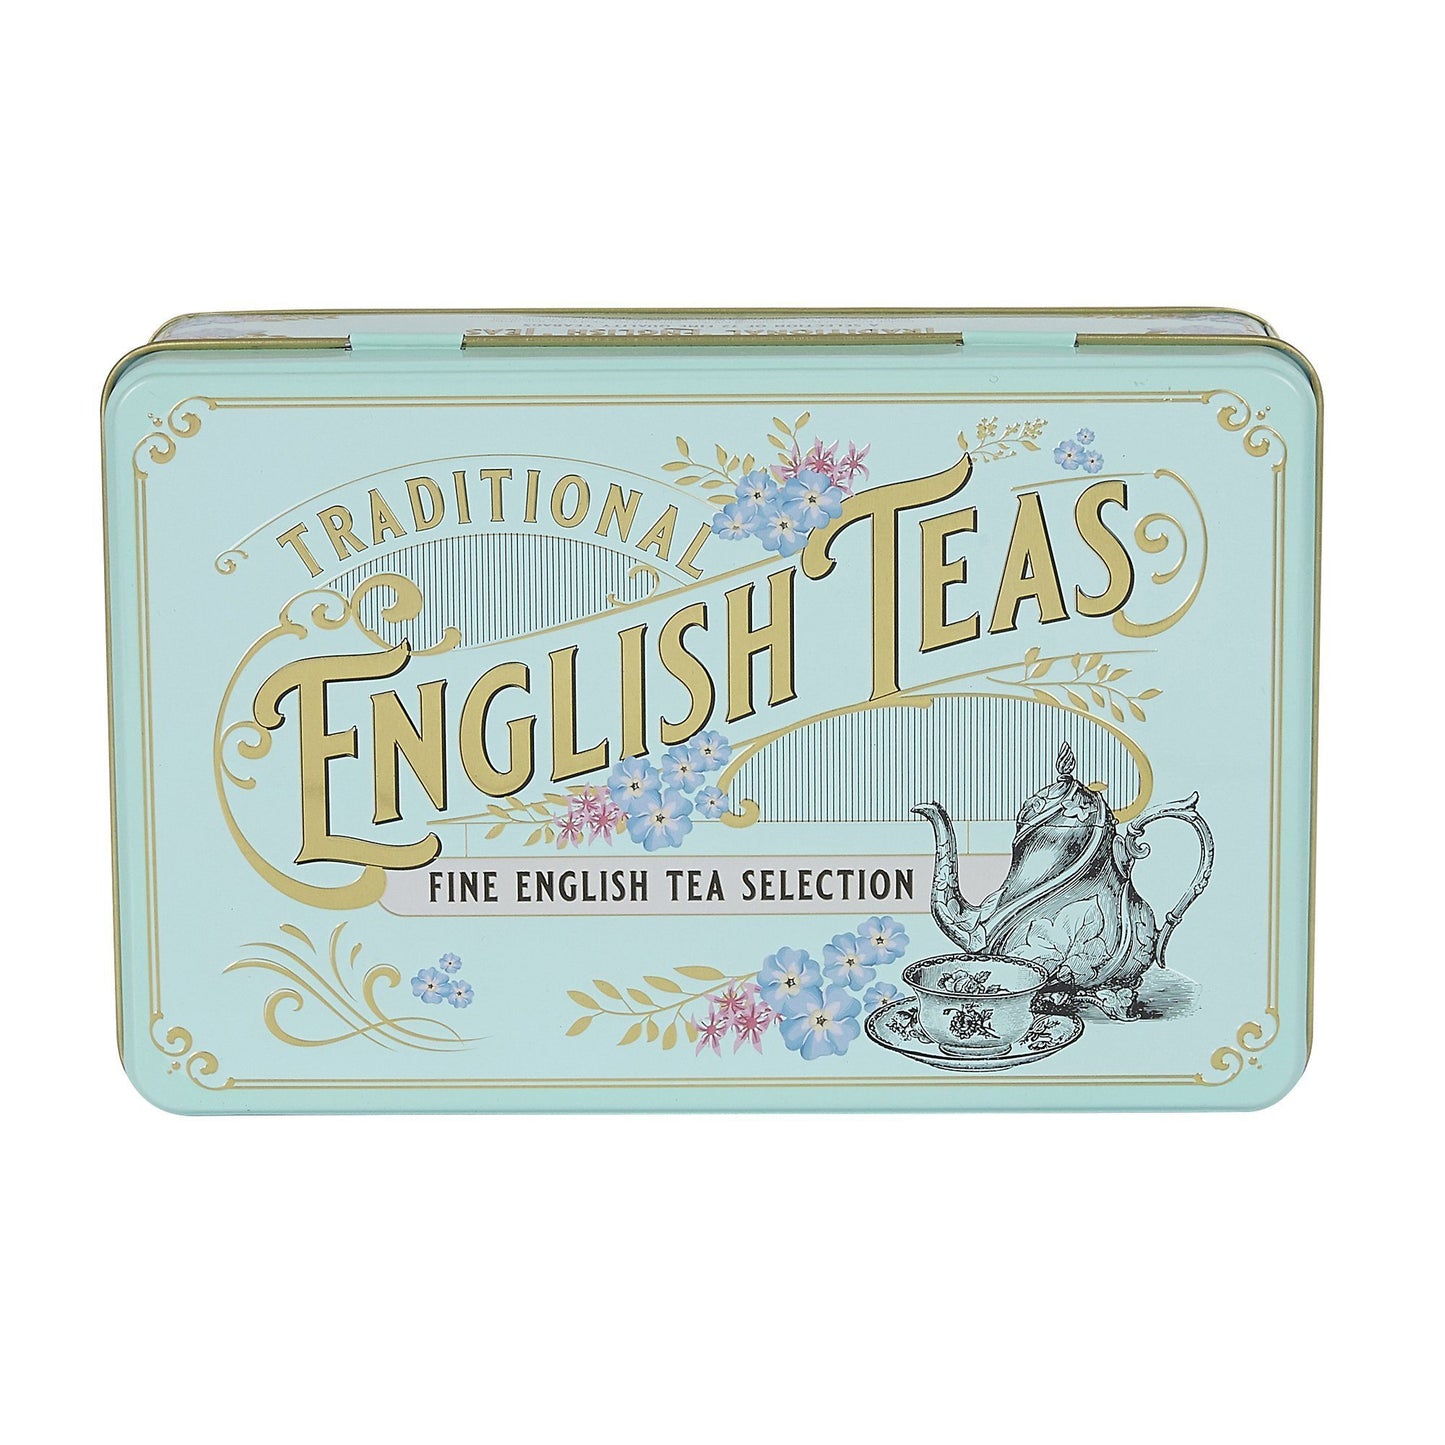 Vintage Victorian Collection Gift Black Tea New English Teas 